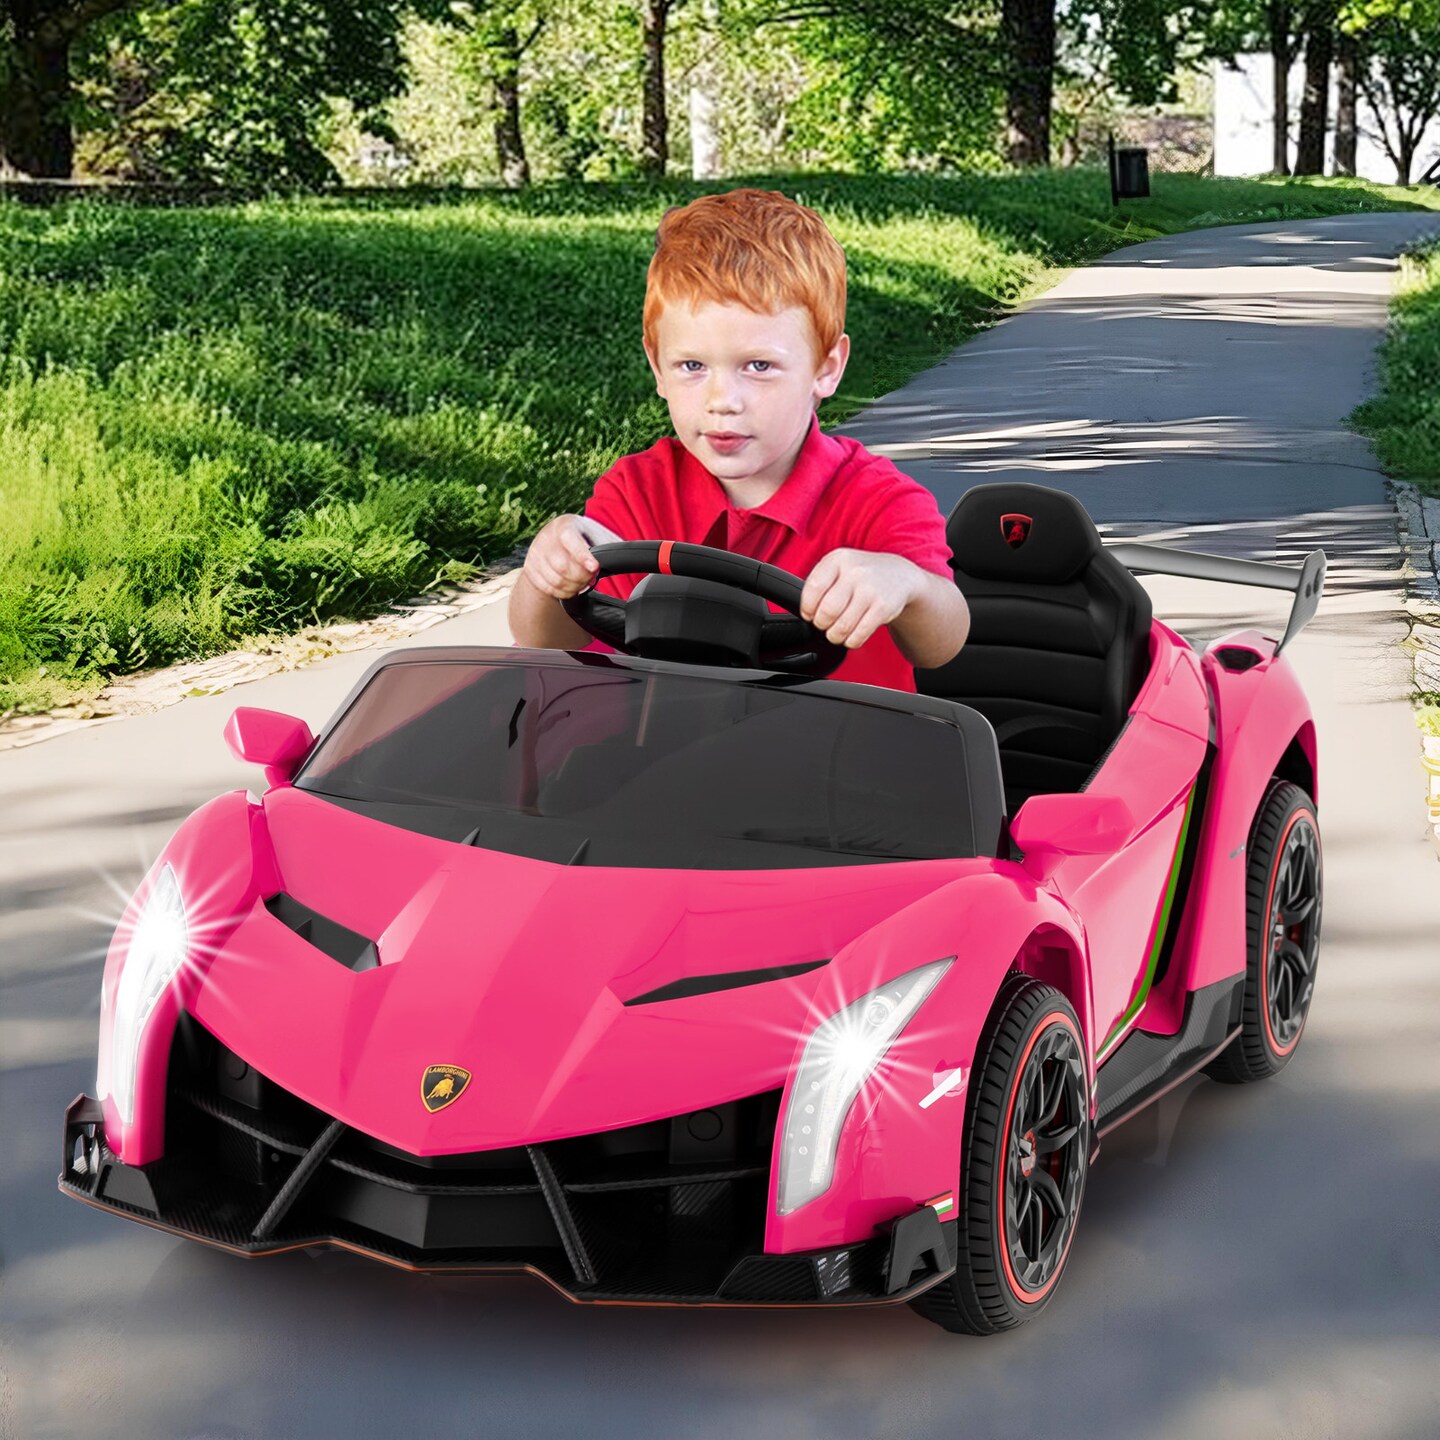 12v Licensed Lamborghini 4wd Kids Ride-on Sports Car With 2.4g Remote